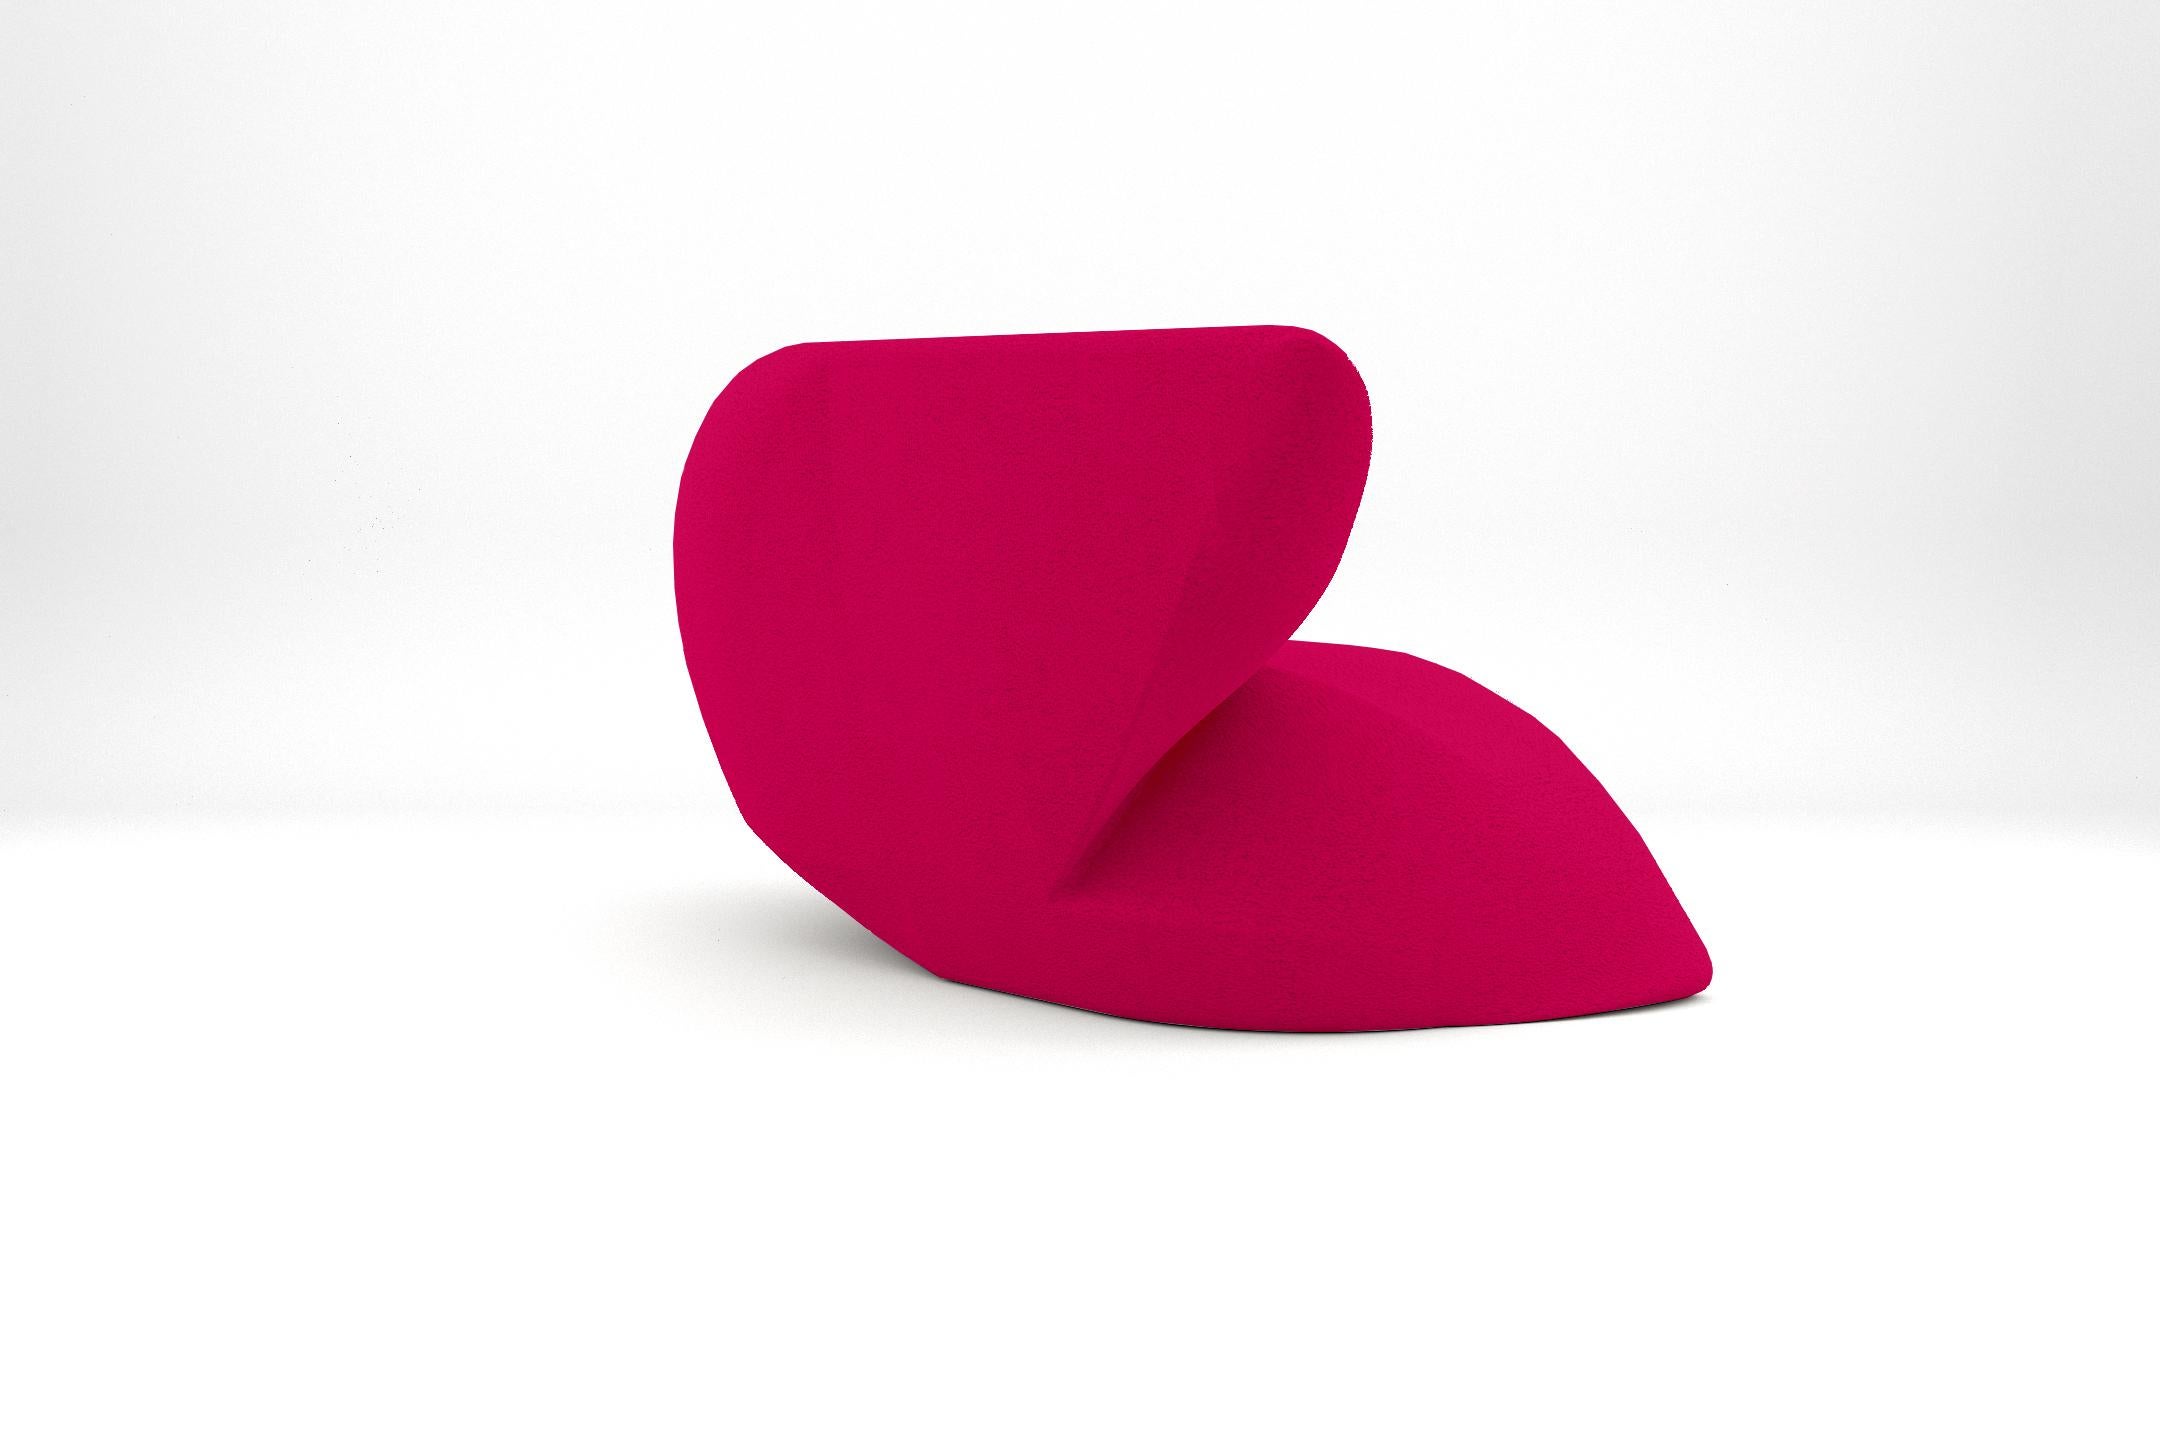 European Delta Armchair - Modern Raspberry Red Upholstered Armchair For Sale